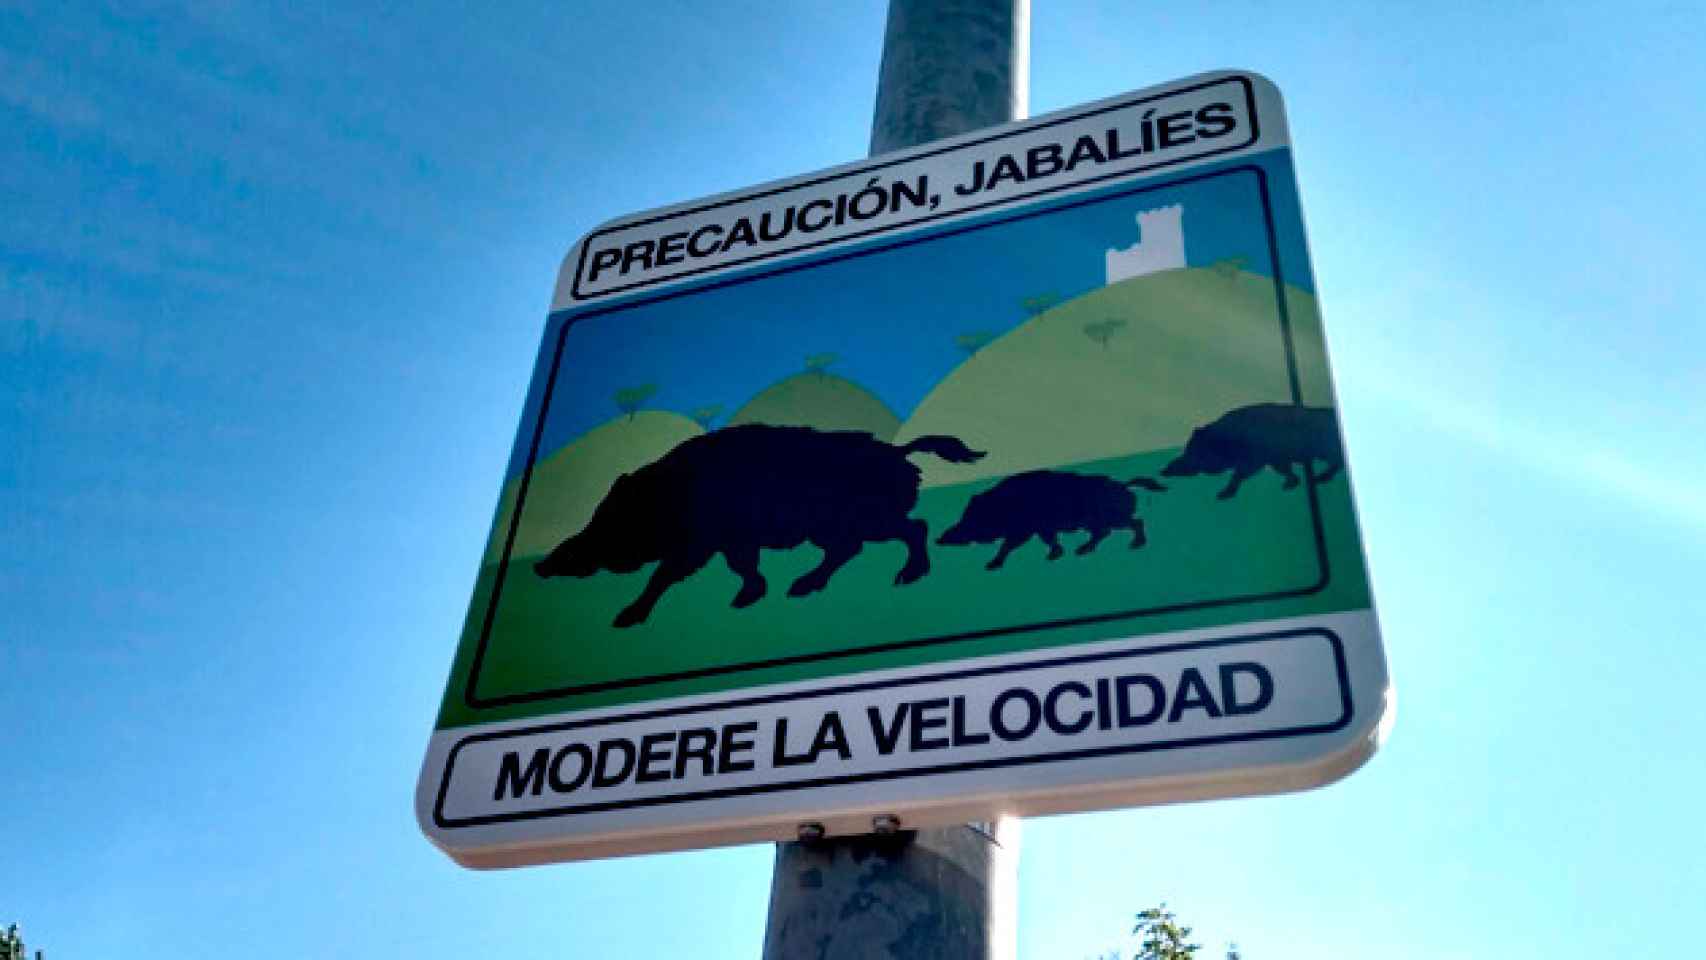 Cartel de precaución, jabalíes en Torrelodones (Madrid) / CG